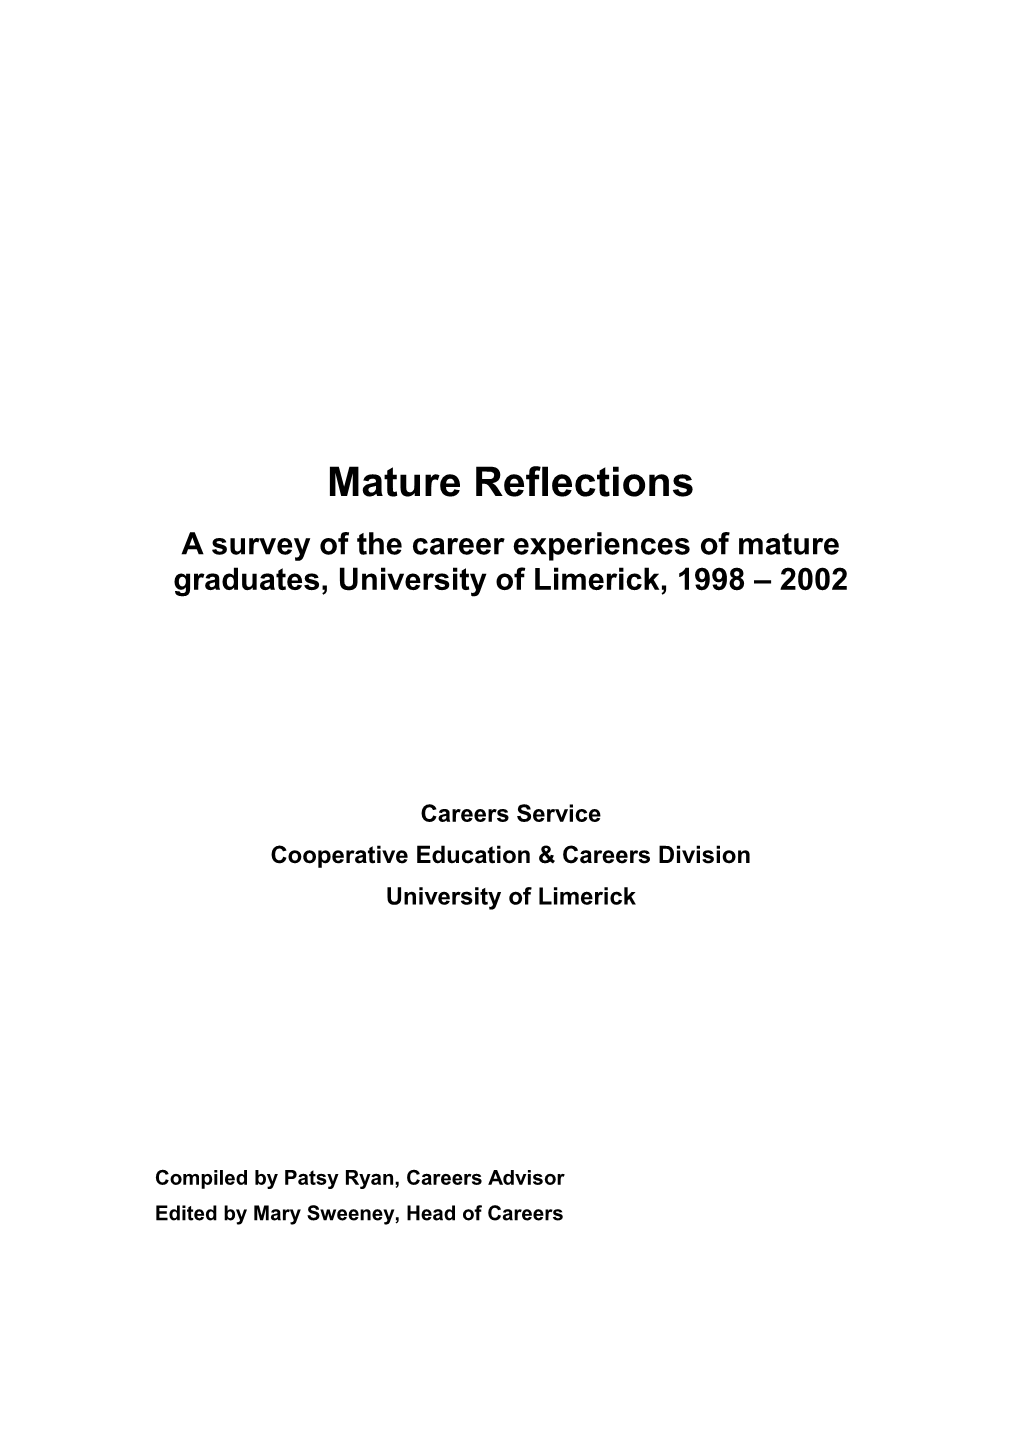 Survey of Mature Graduates 2003; University of Limerick